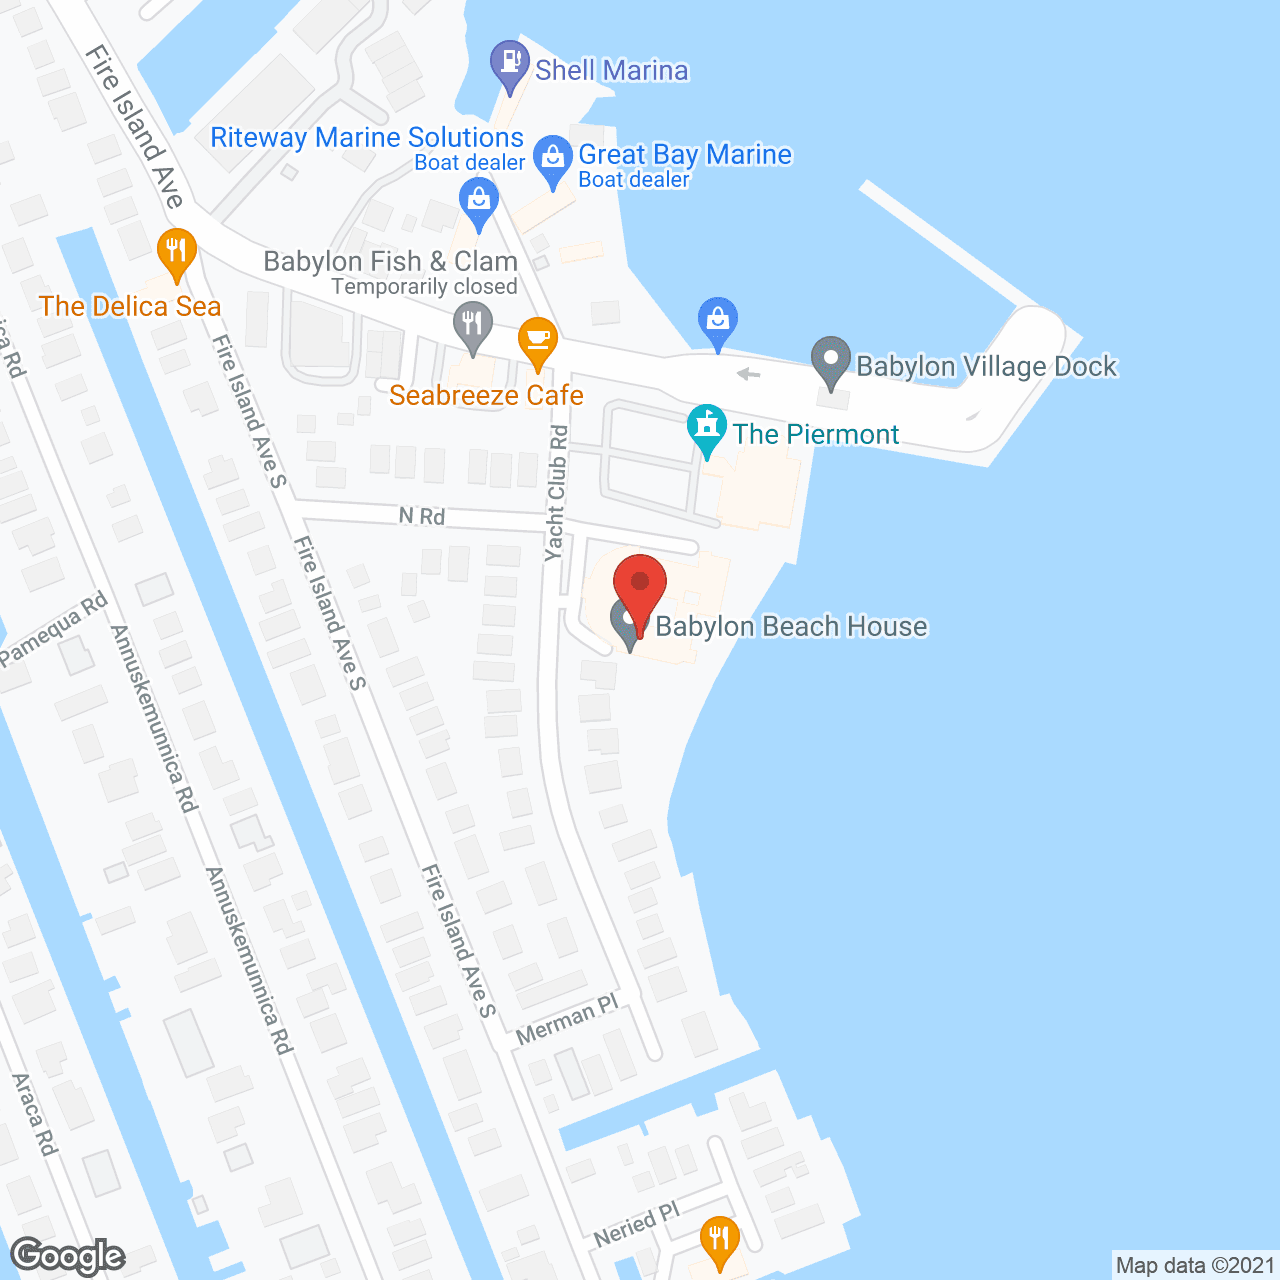 Babylon Beach House in google map